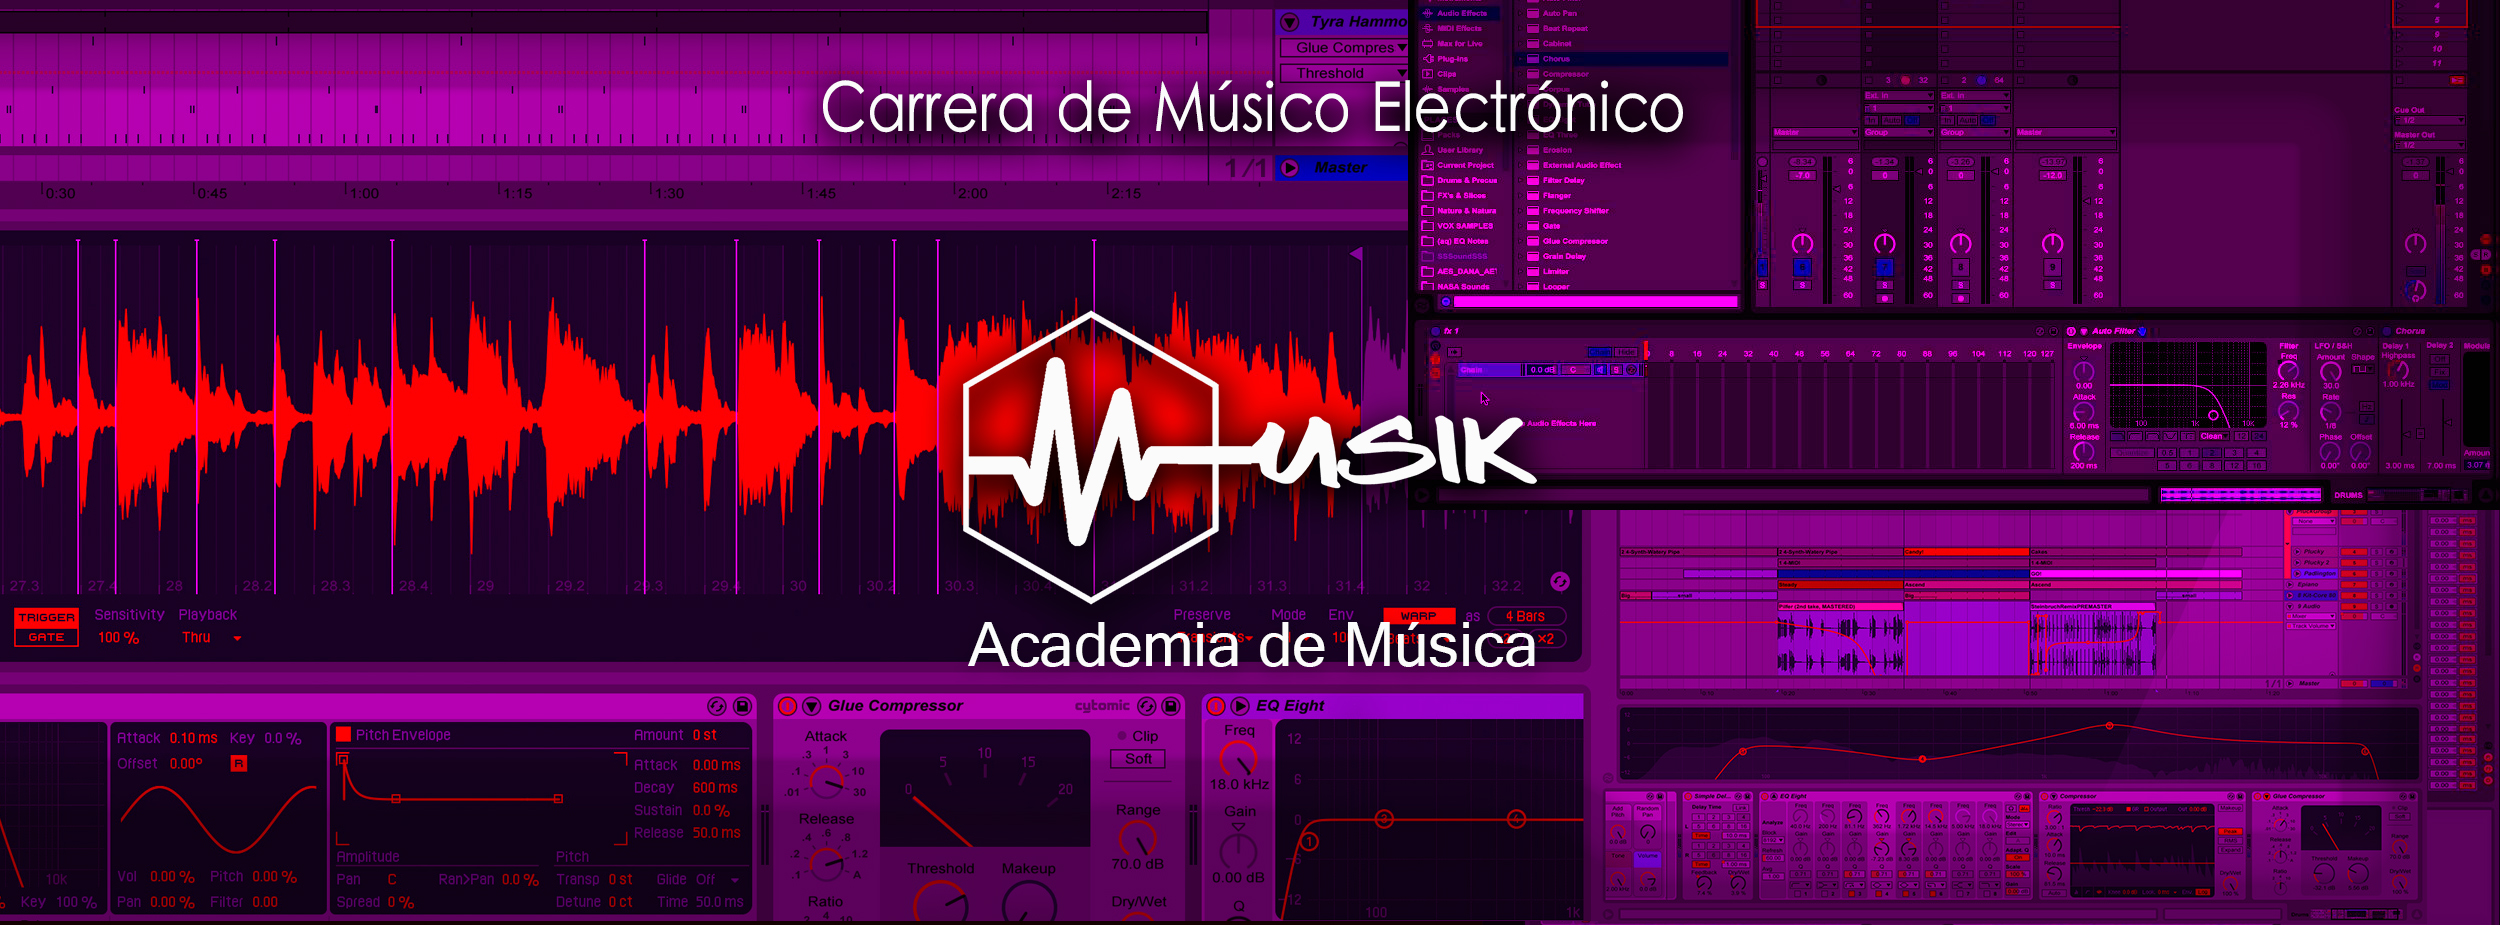 Musik 024 - Carrera Musico Elecxtronico